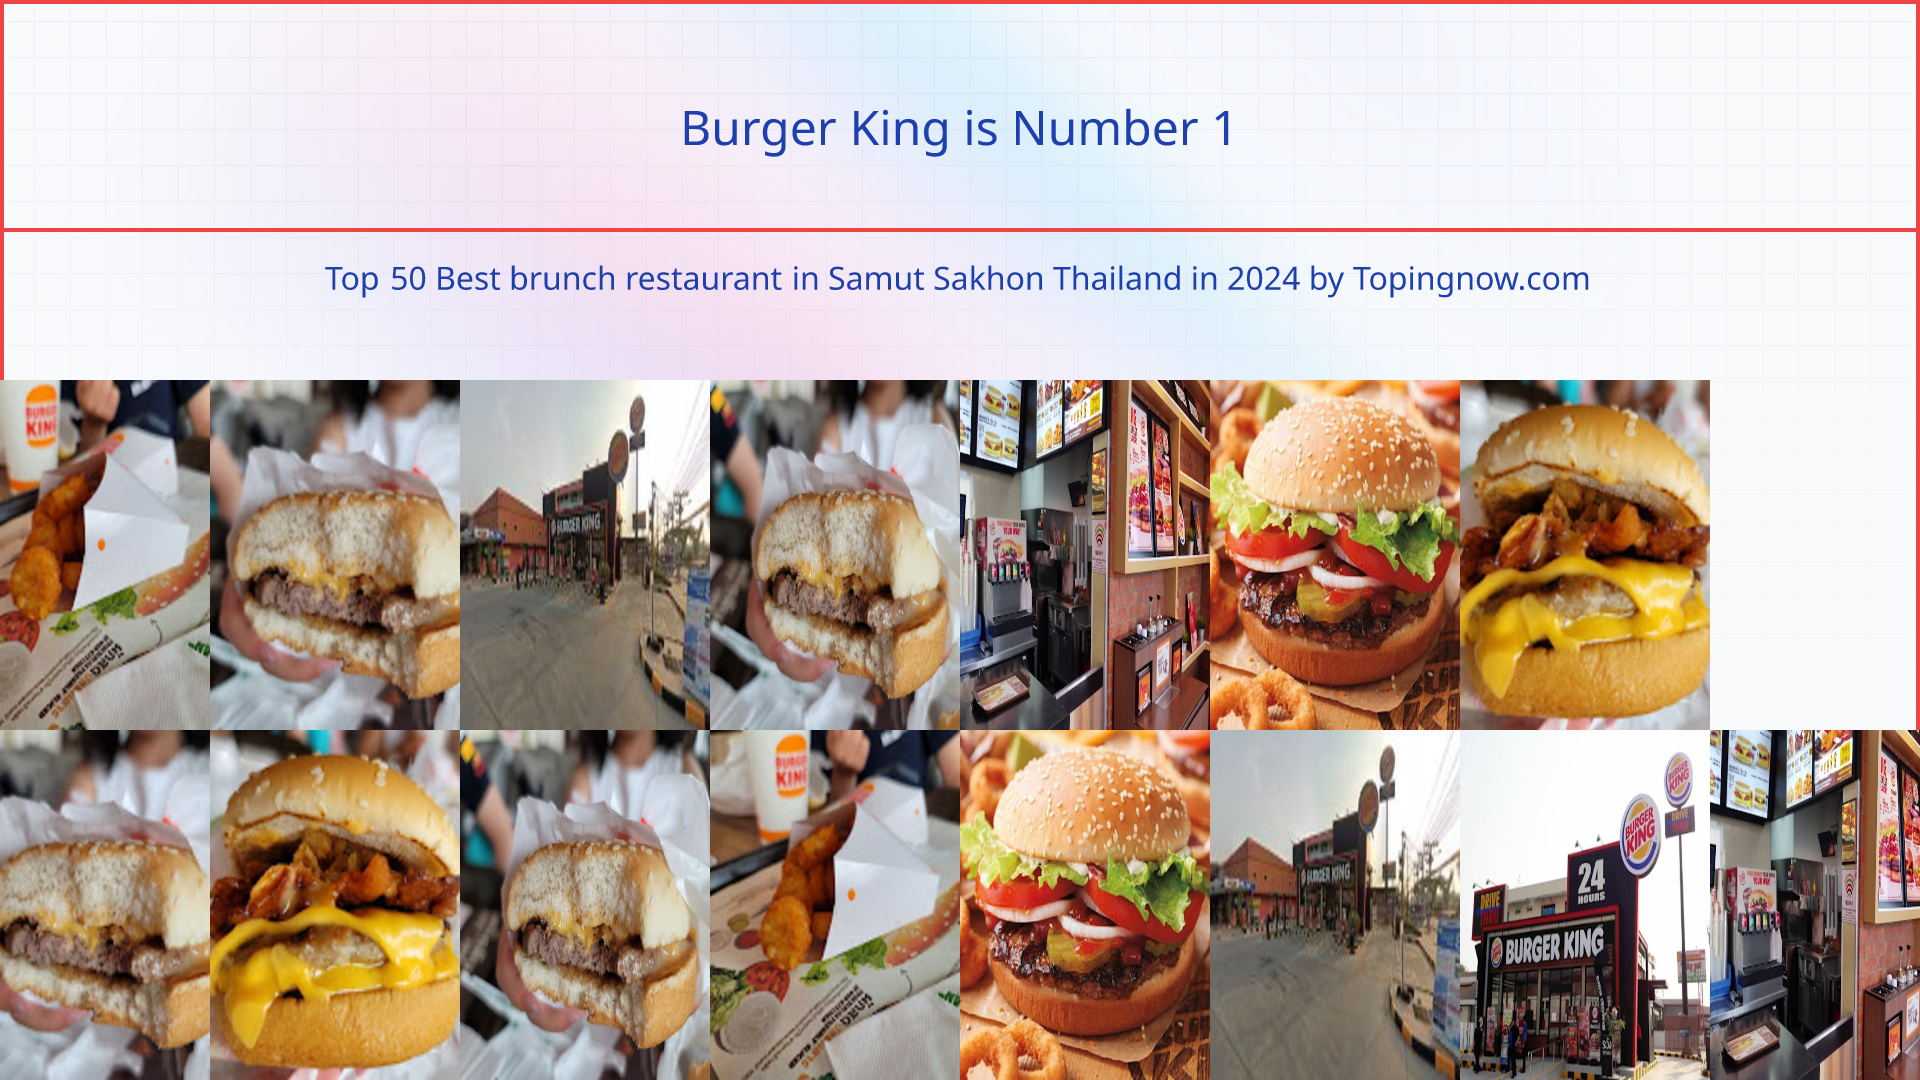 Burger King: Top 50 Best brunch restaurant in Samut Sakhon Thailand in 2024